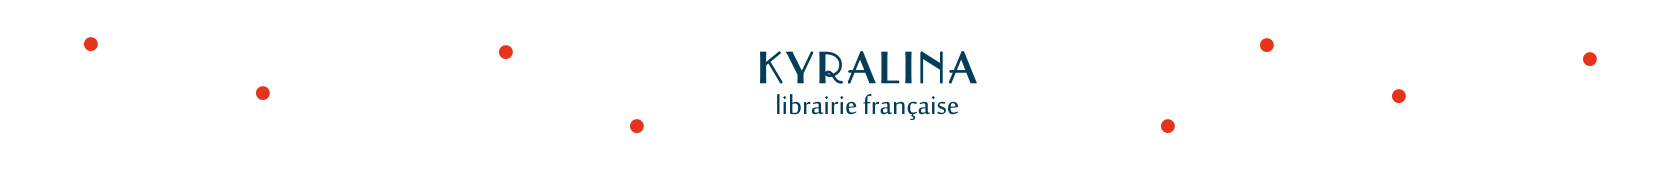 Kyralina librairie française